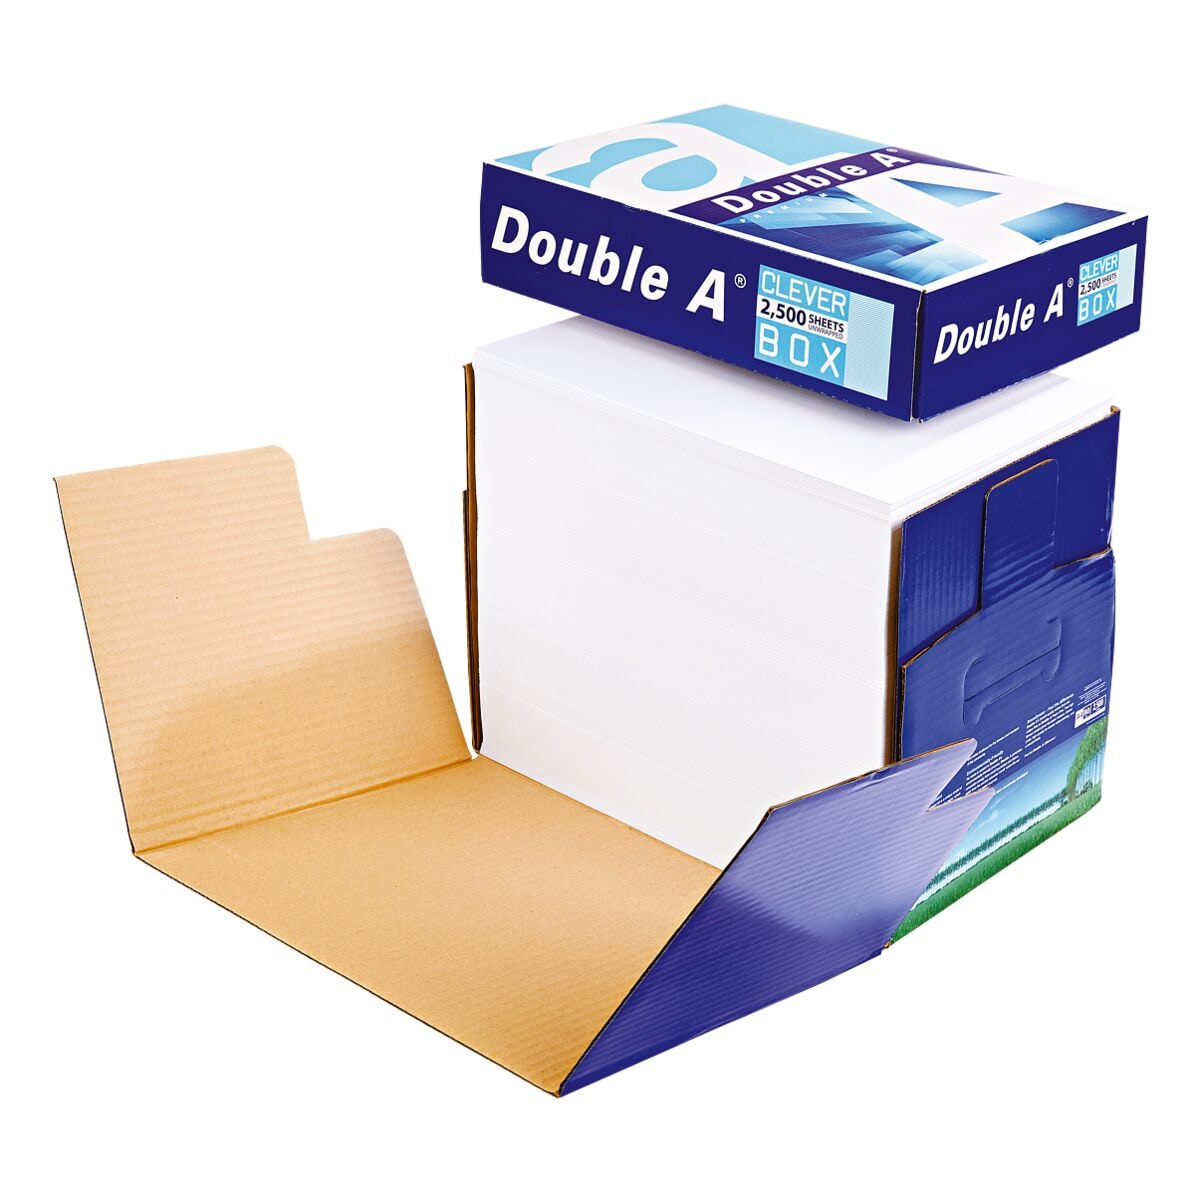 Maxi-Box Multifunktionales Druckerpapier A4 Double A - 2500 Blatt gesamt